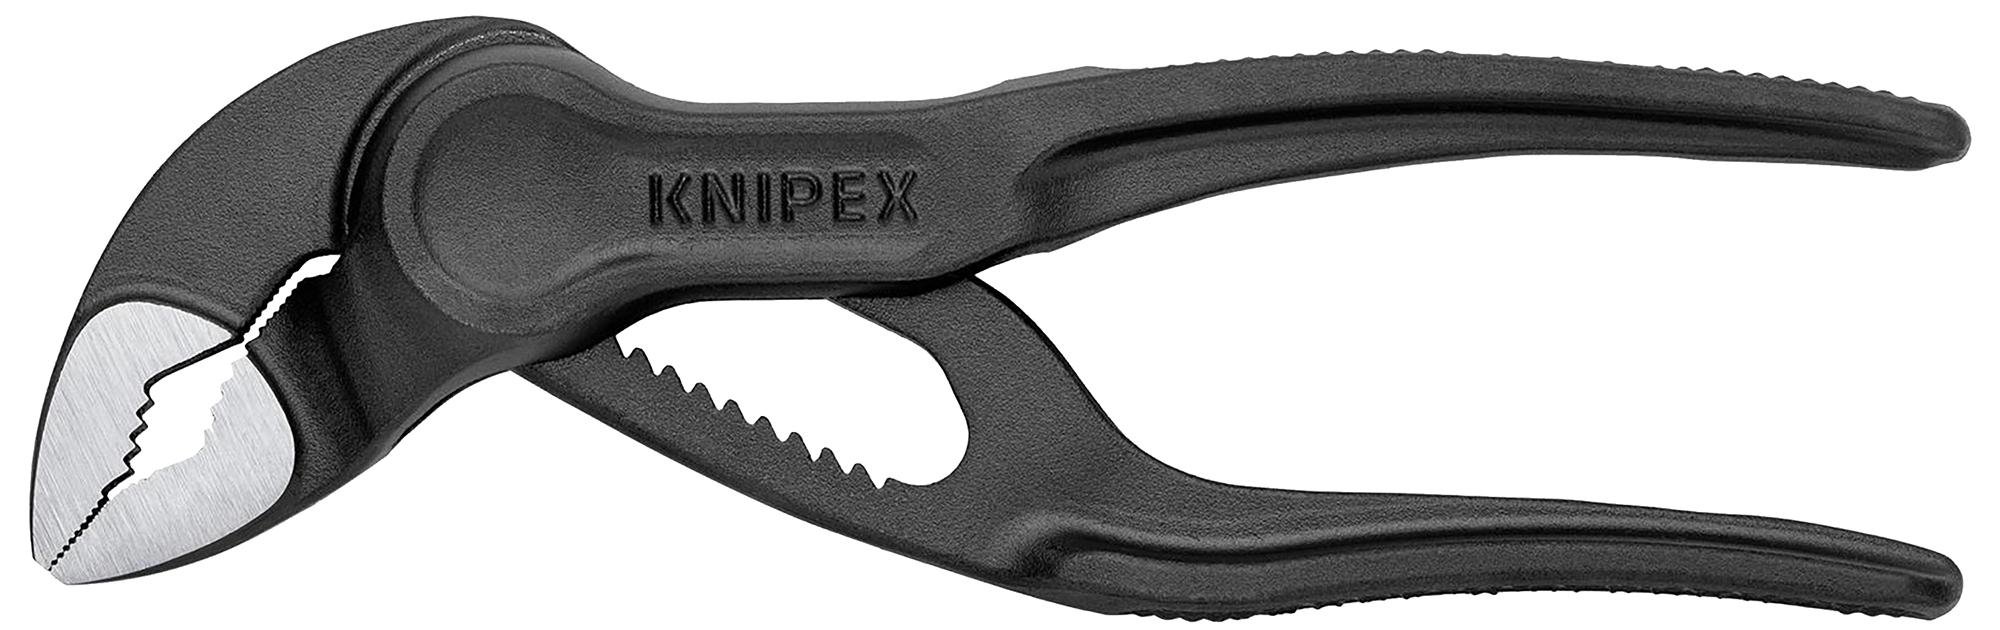 Knipex 87 00 100 Water Pump Plier, 28mm, 100mm